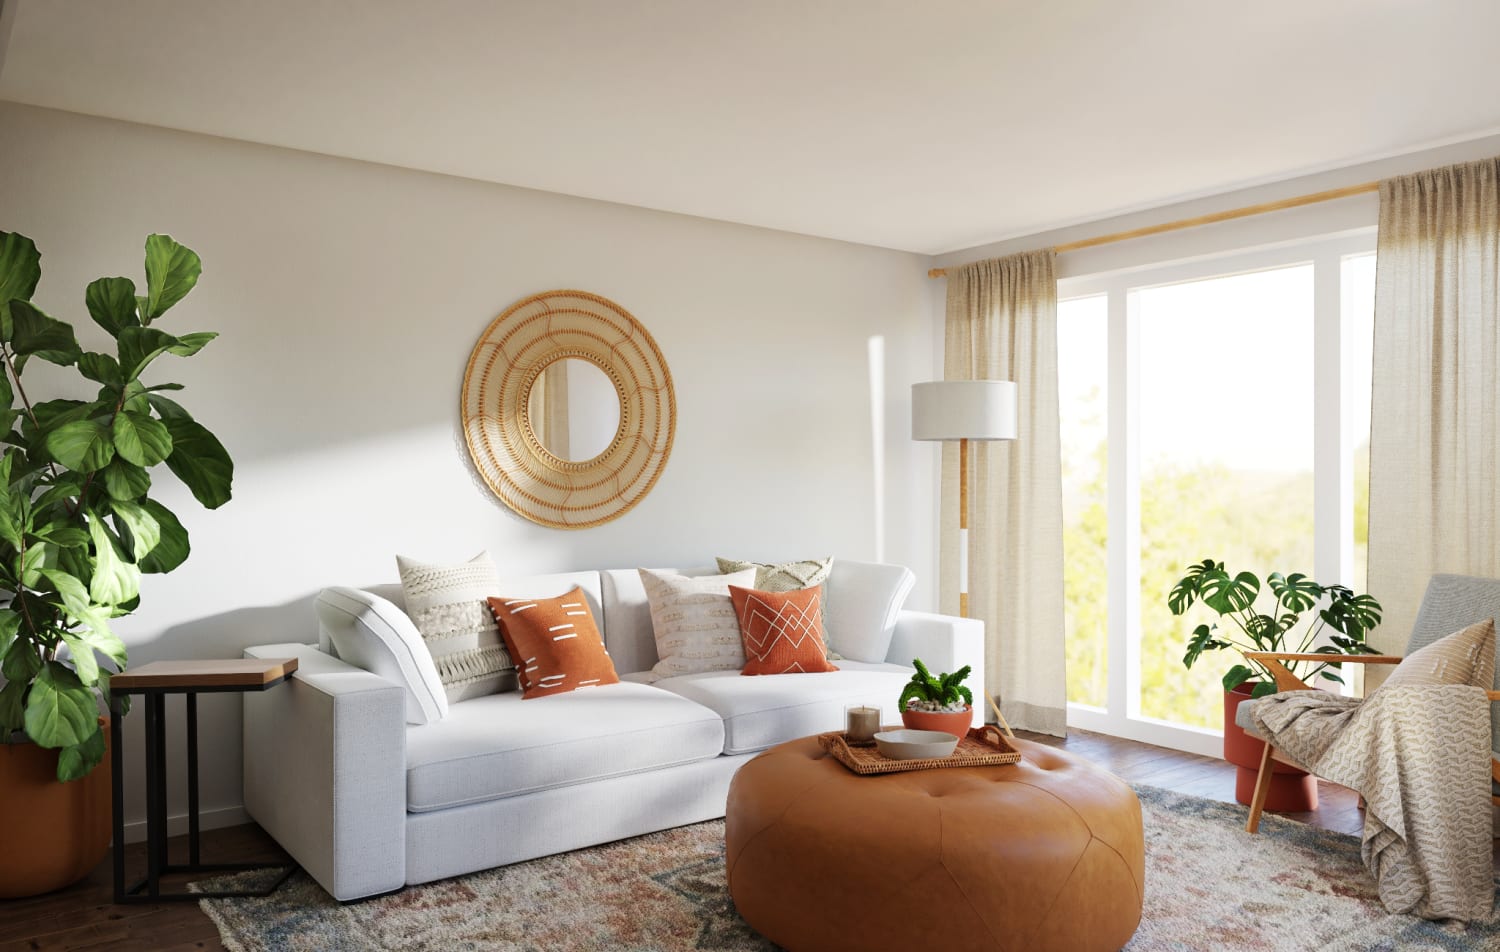 10 Modern Living Room Interior Design & Decor Ideas You Can Steal